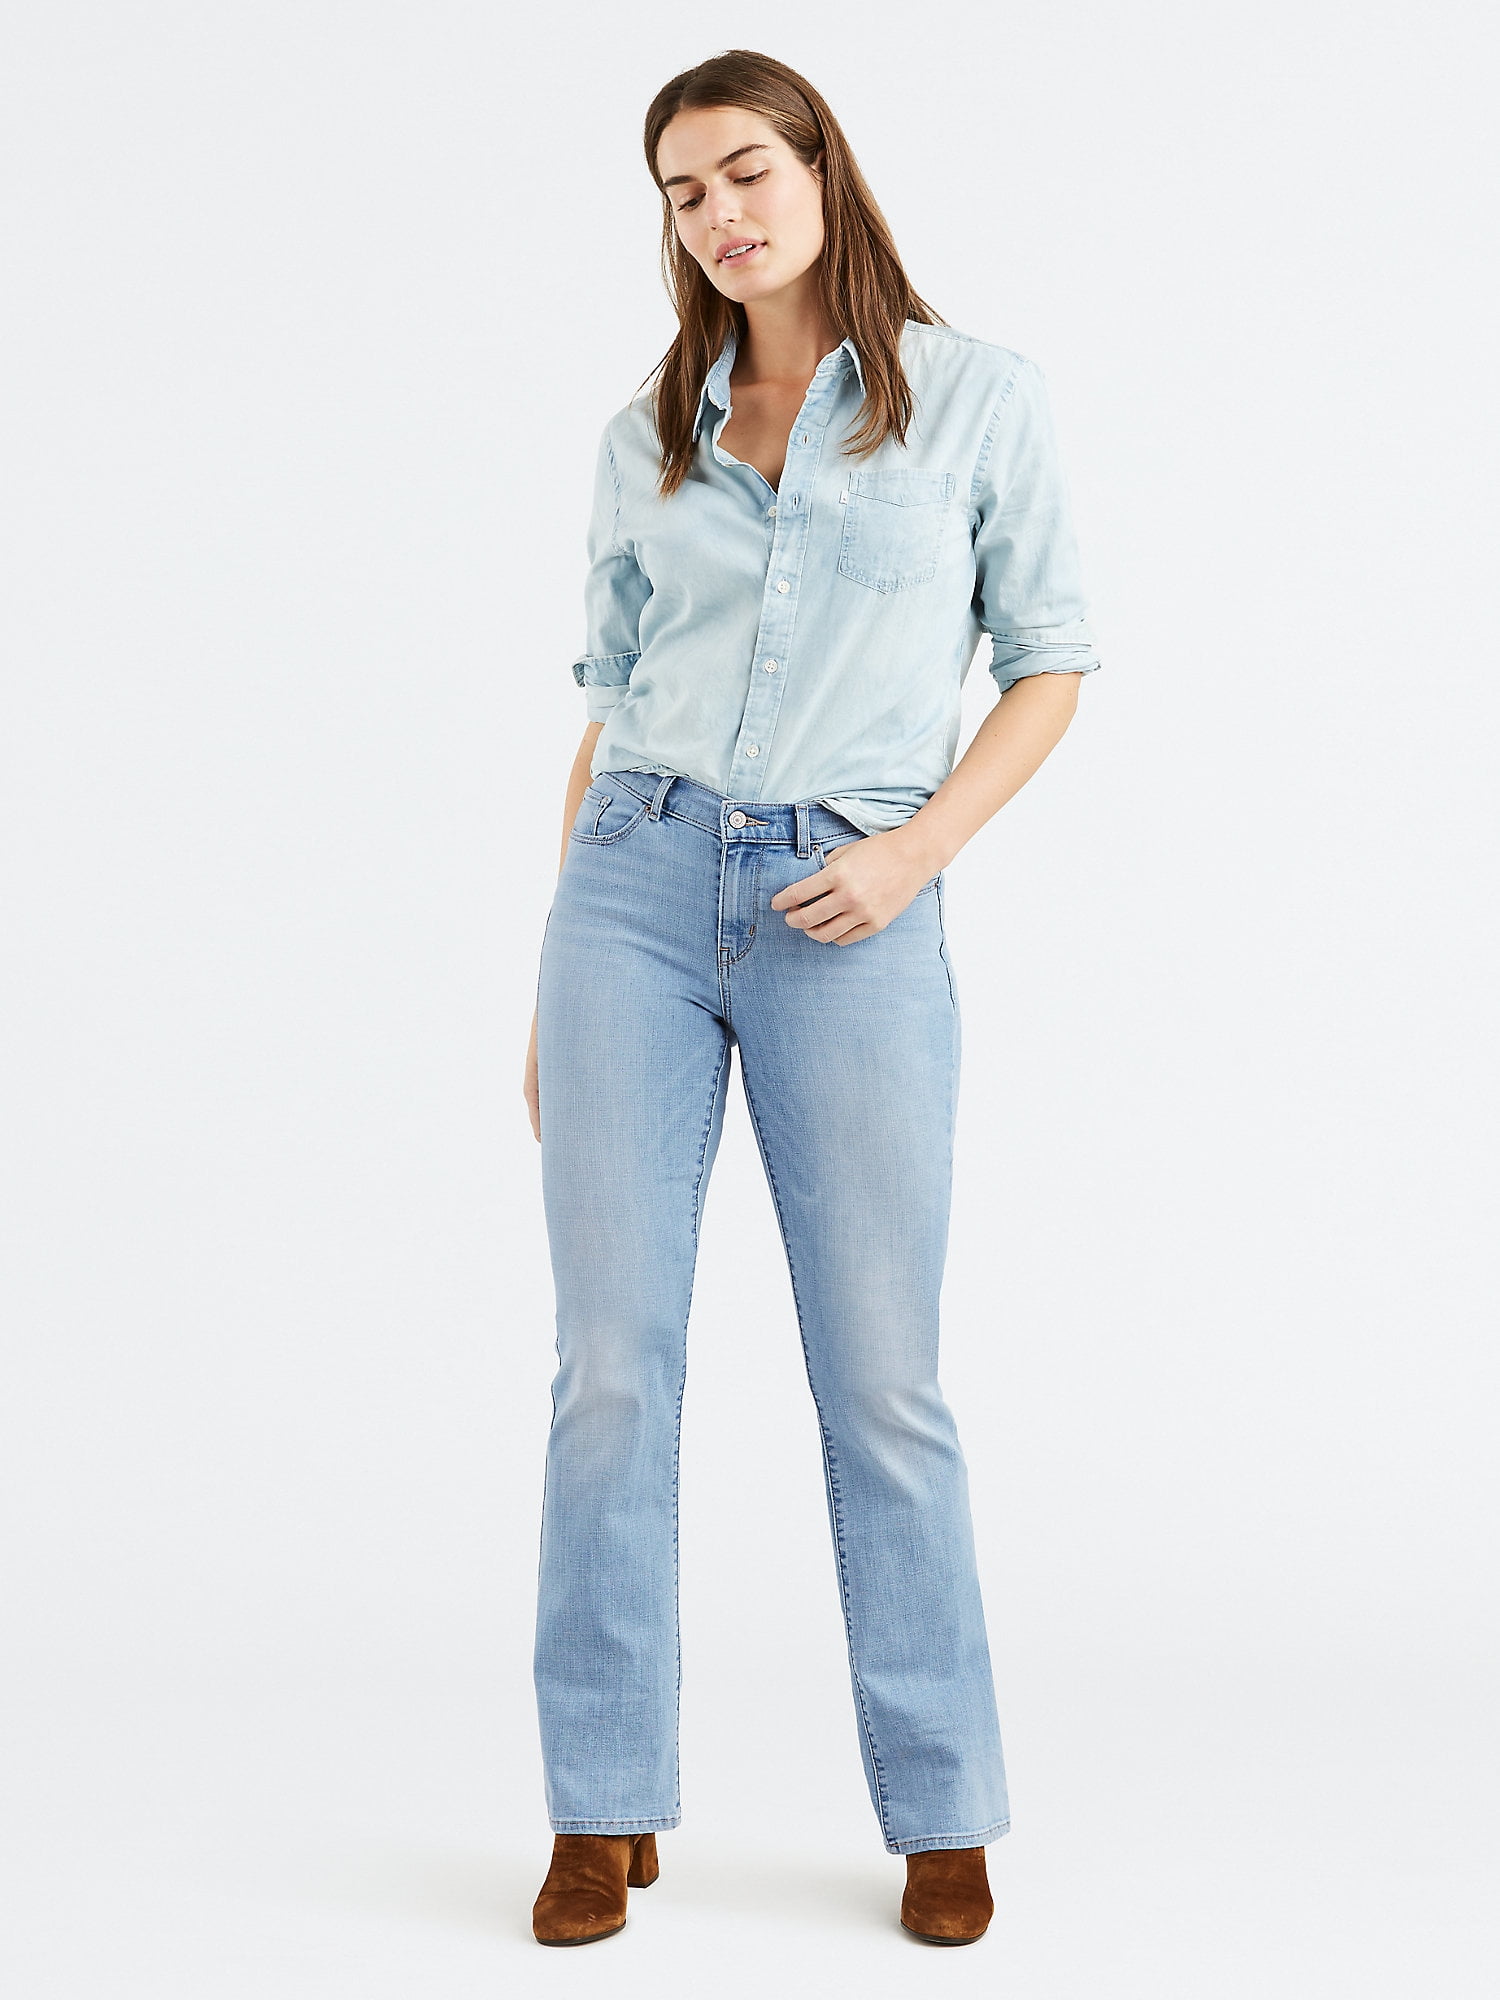 Levi's Original Red Tab Women's Classic Bootcut Jeans - Walmart.com